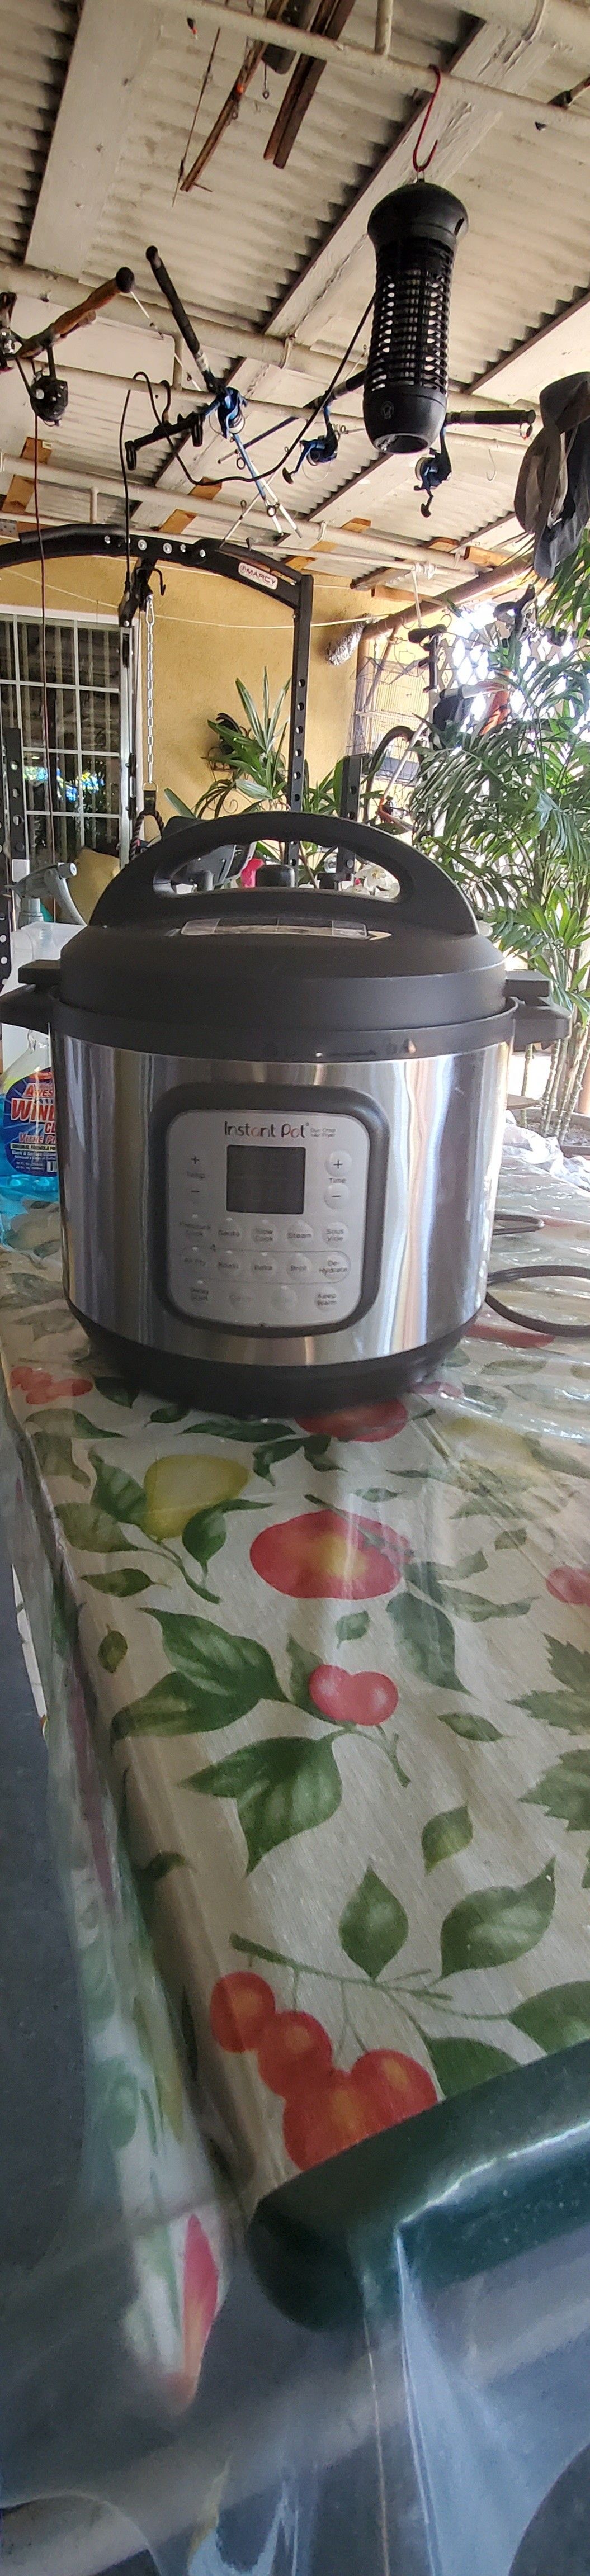 Instant pot duo crisp pressure cooker and air fryer